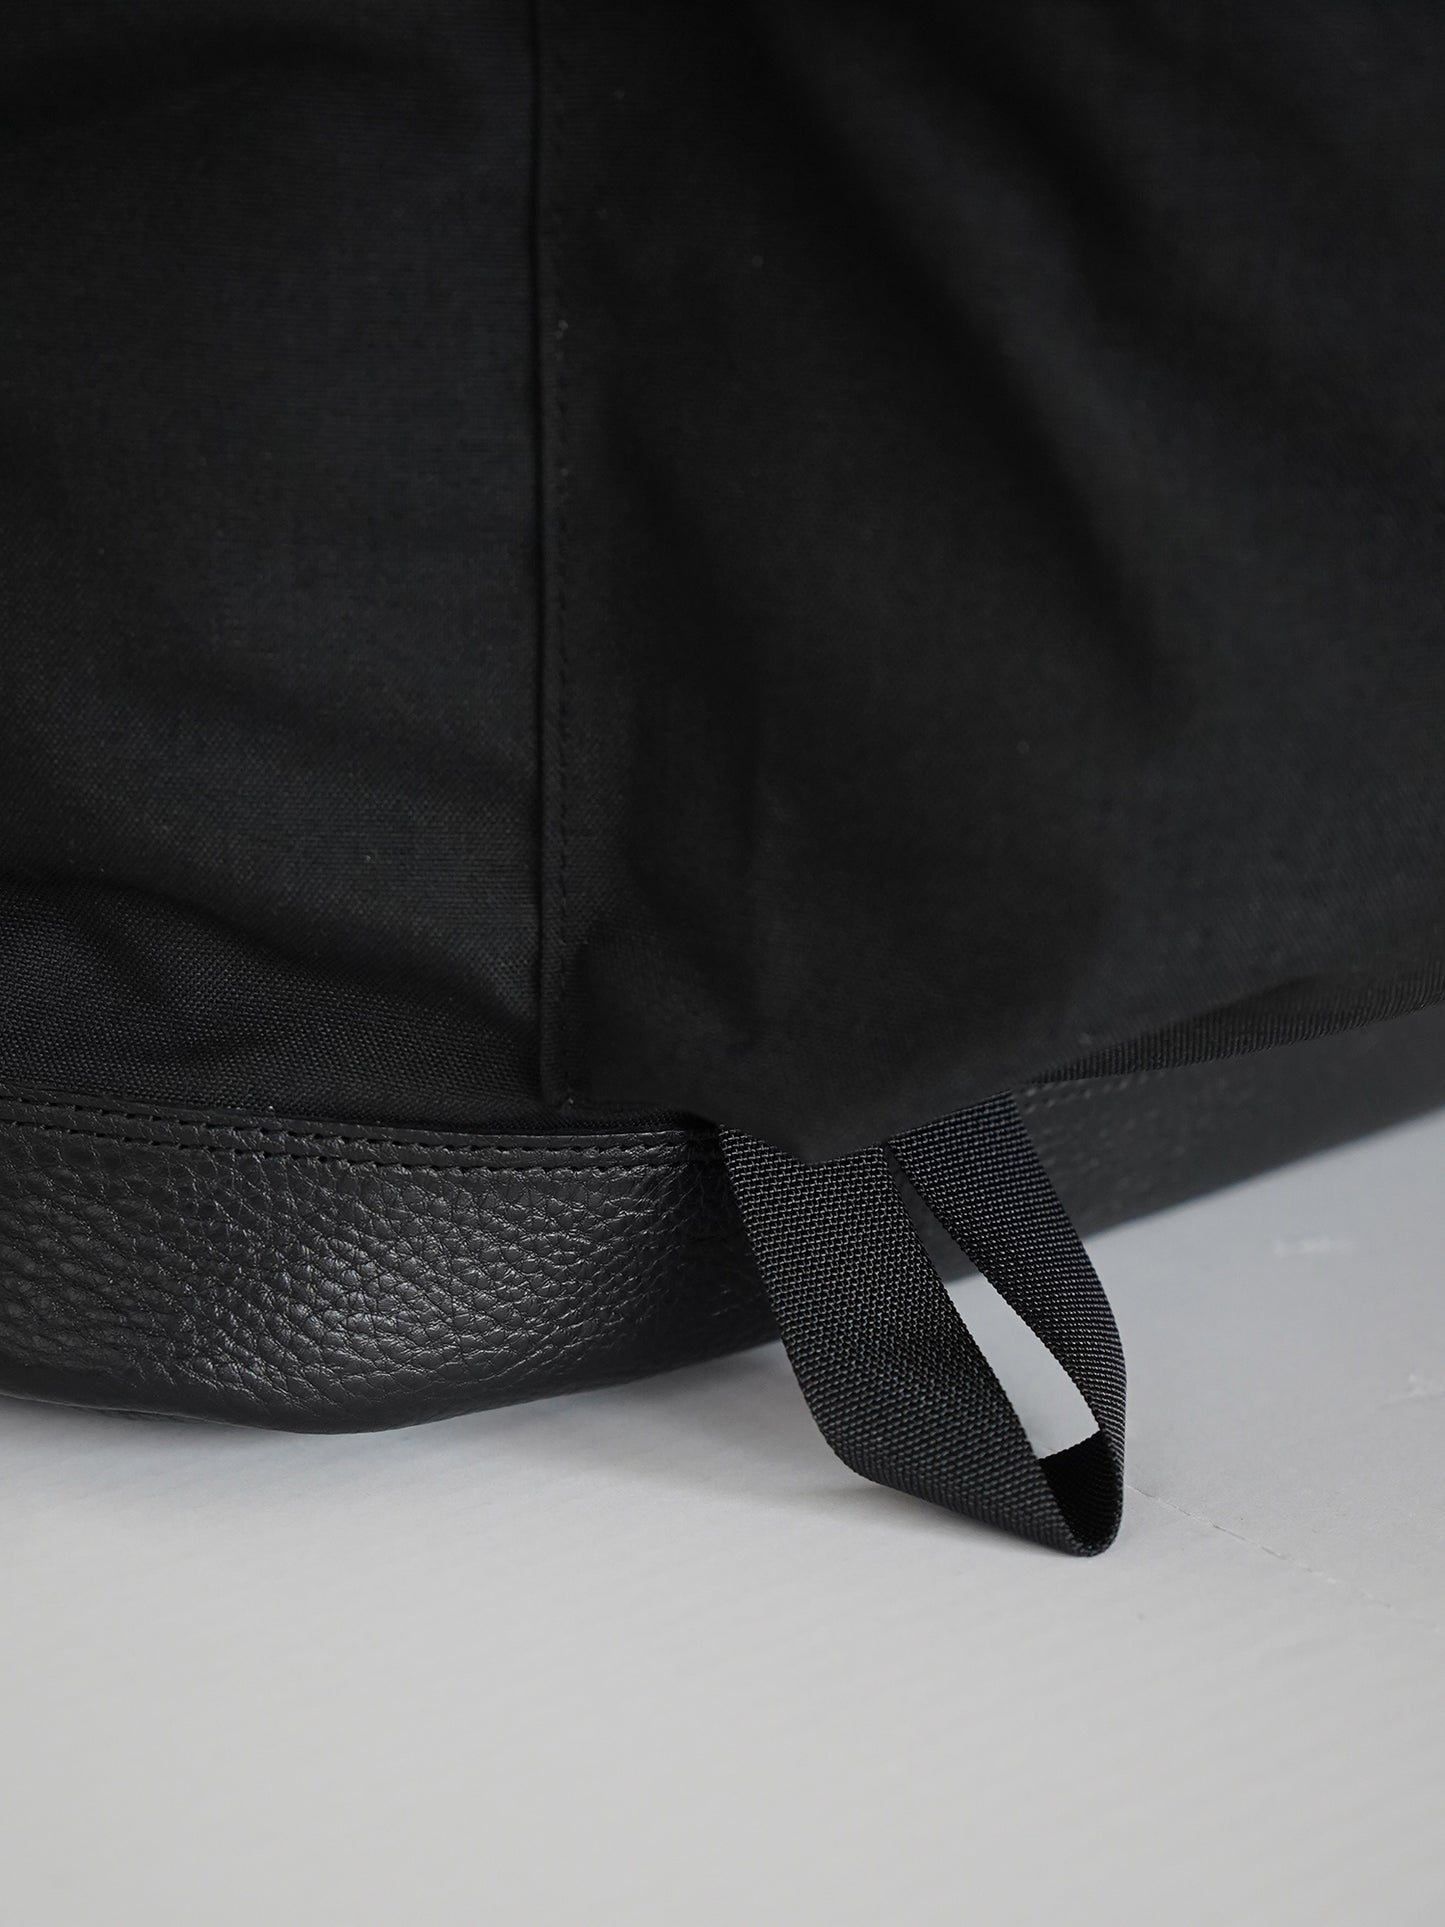 Daytrip Backpack Leather Bottom